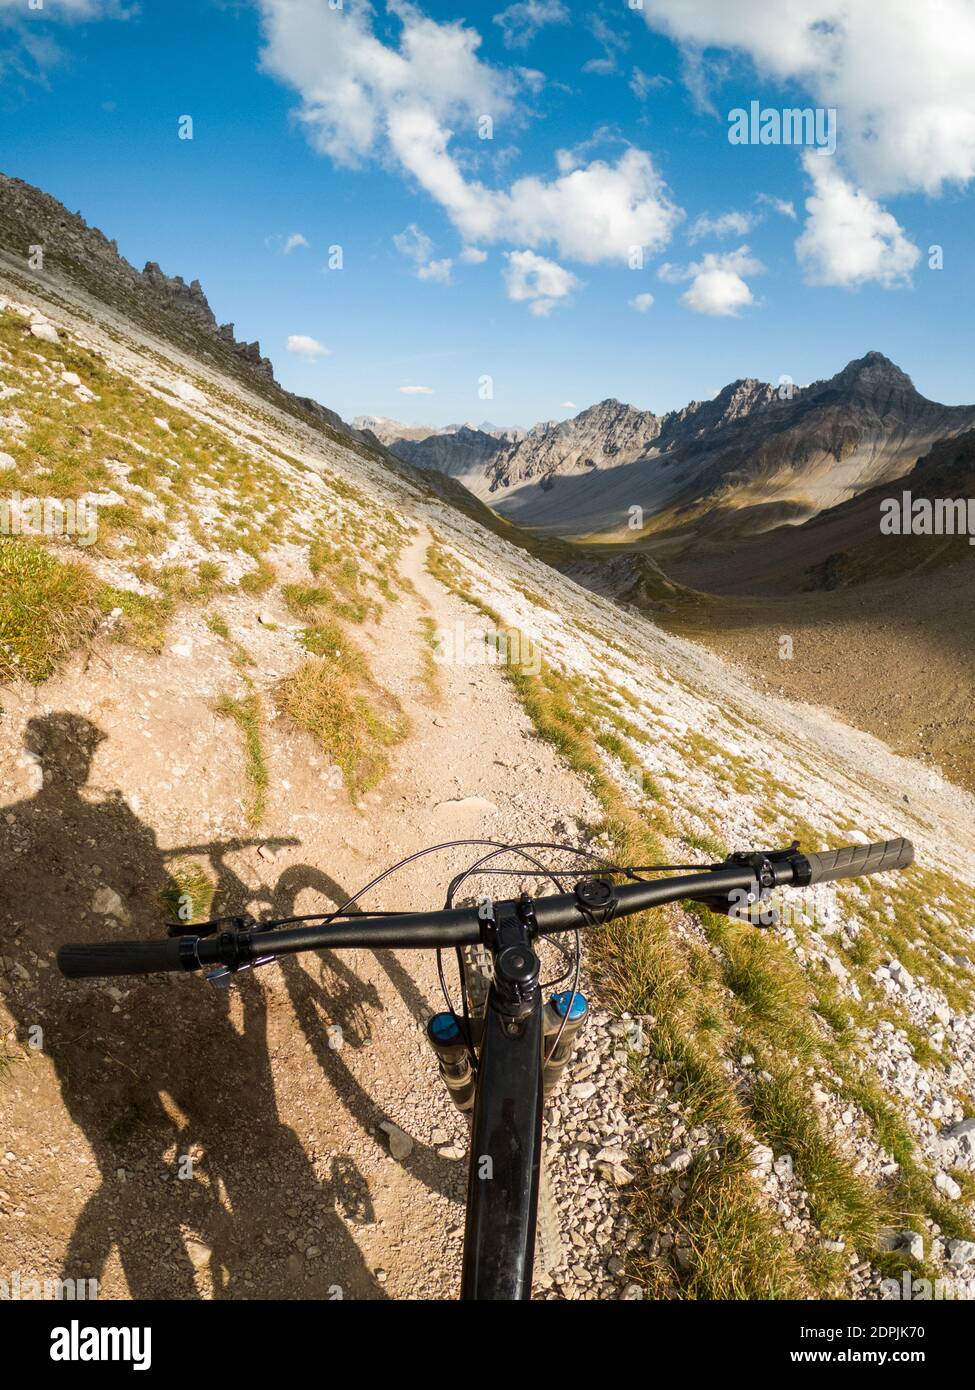 Gopro First Person View Mountain Biking On Footpath In The Swiss Alps,  Lenzerheide, Switzerland Stock Photo - Alamy